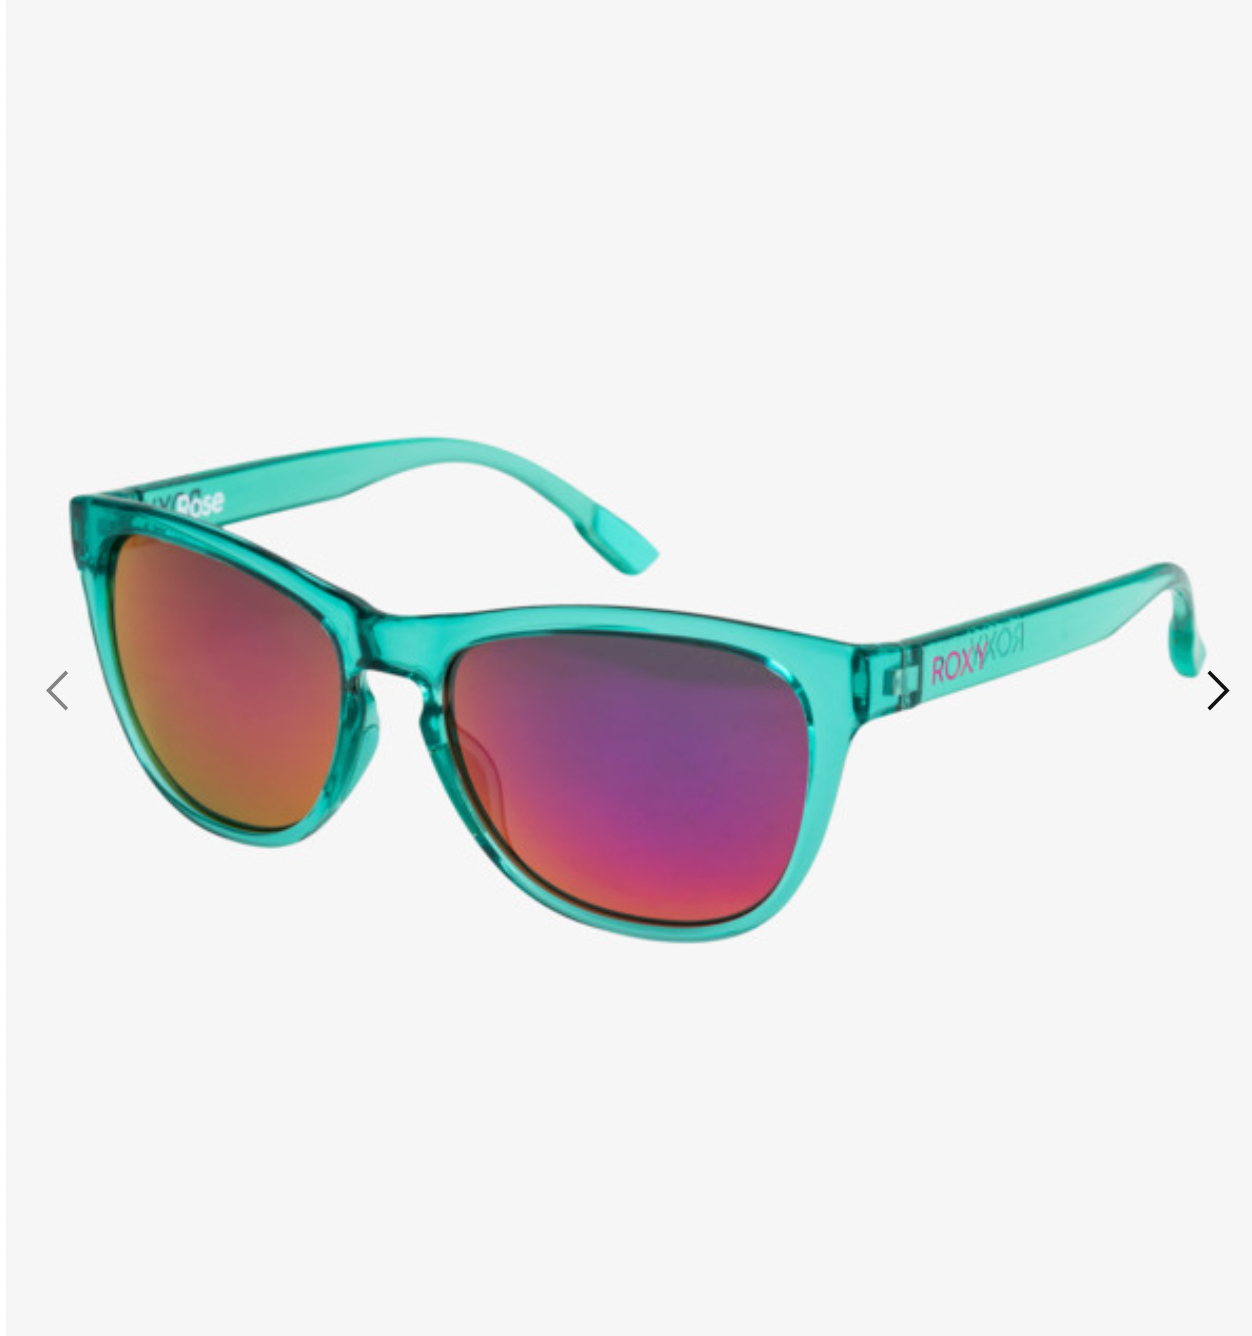 ROXY Rose P - Polarized Sunglasses for Women